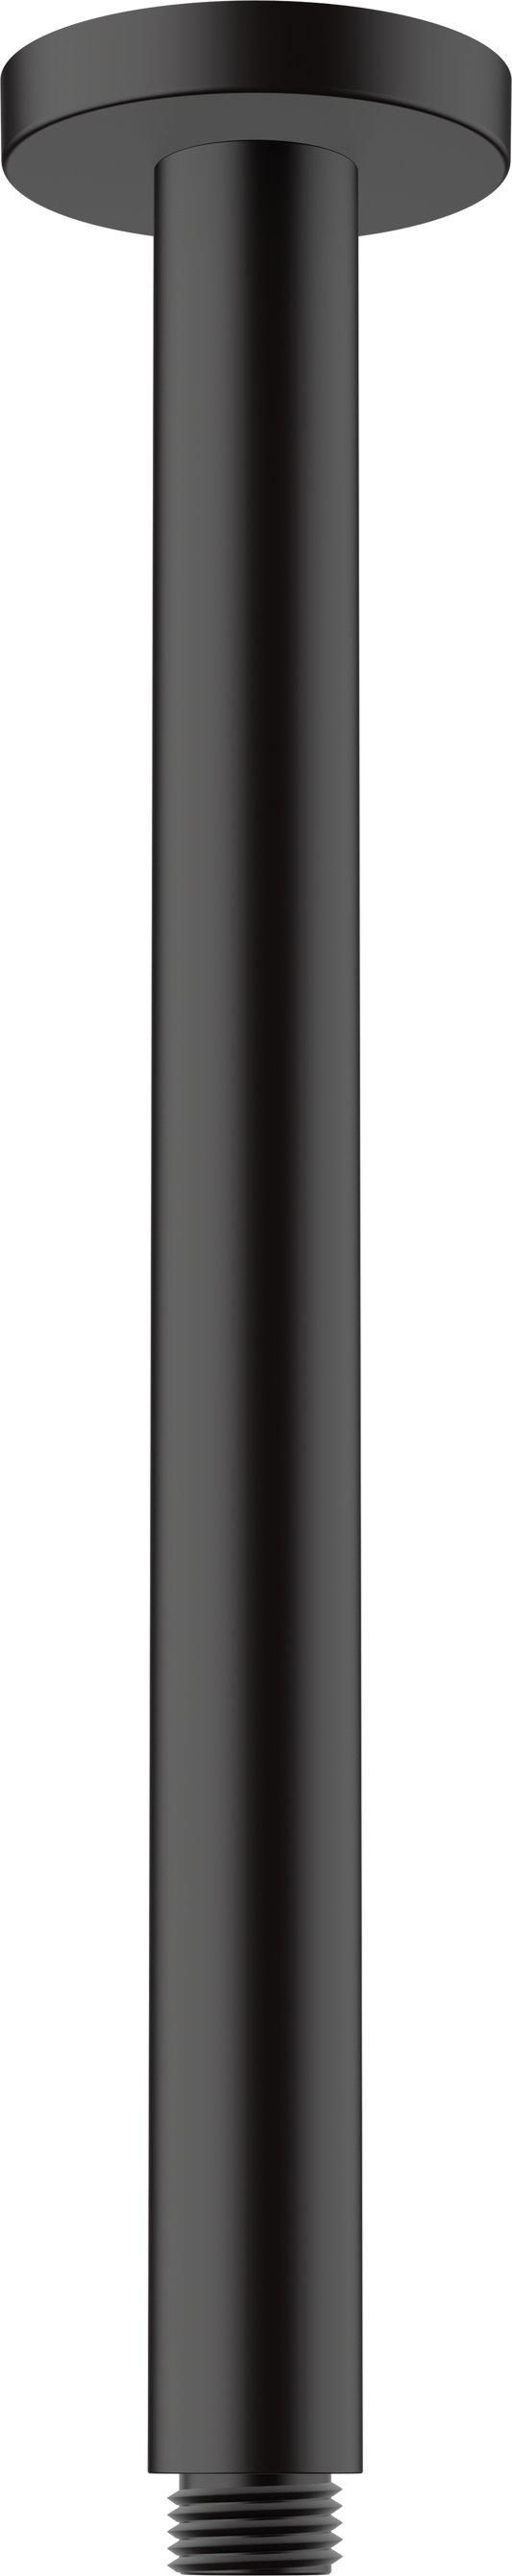 Vernis Blend Ceiling connector 30 cm